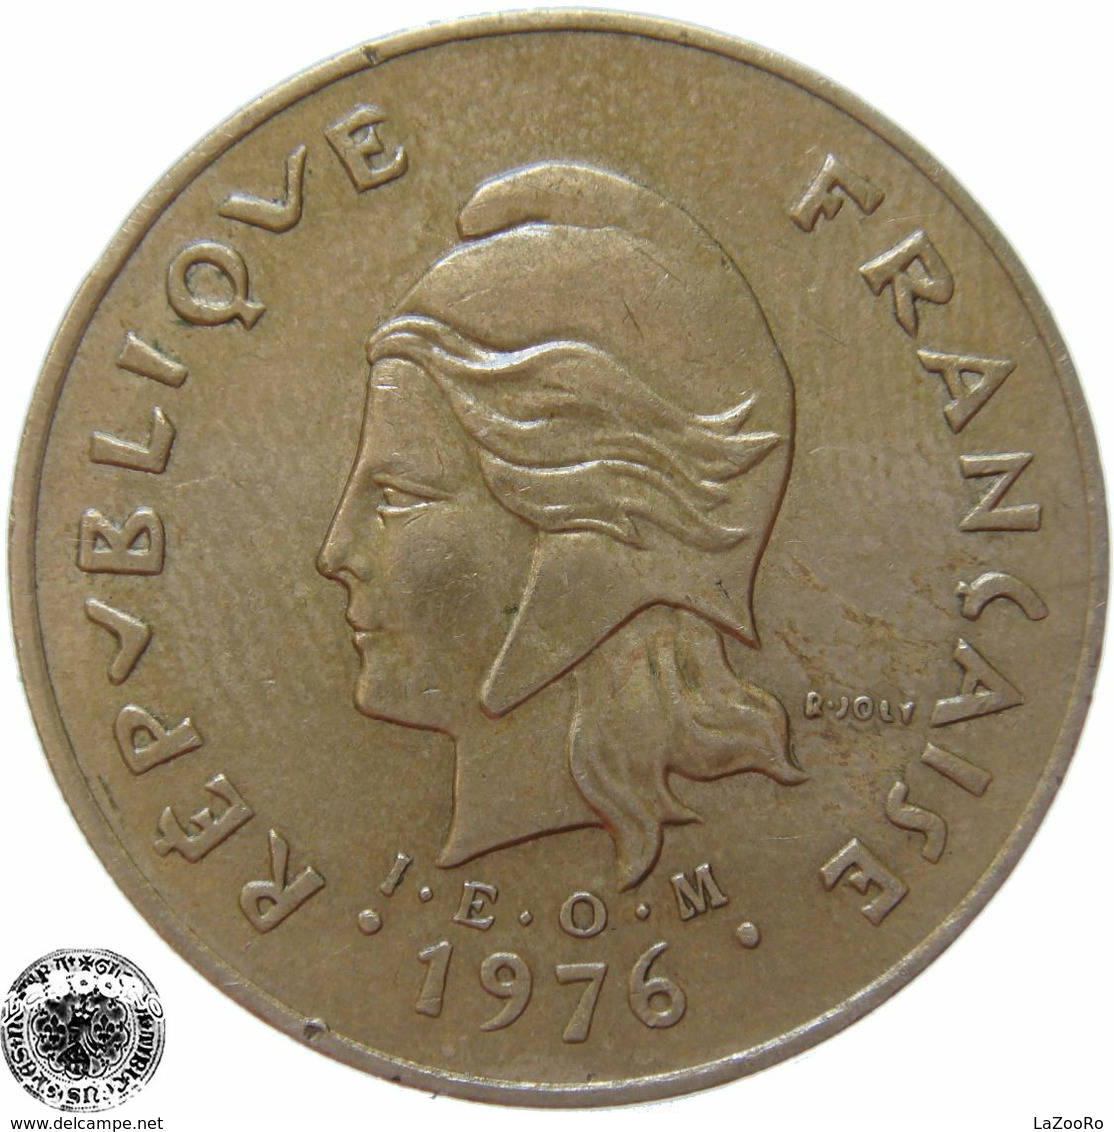 LaZooRo: French Polynesia 100 Francs 1976 XF / UNC - Polinesia Francese